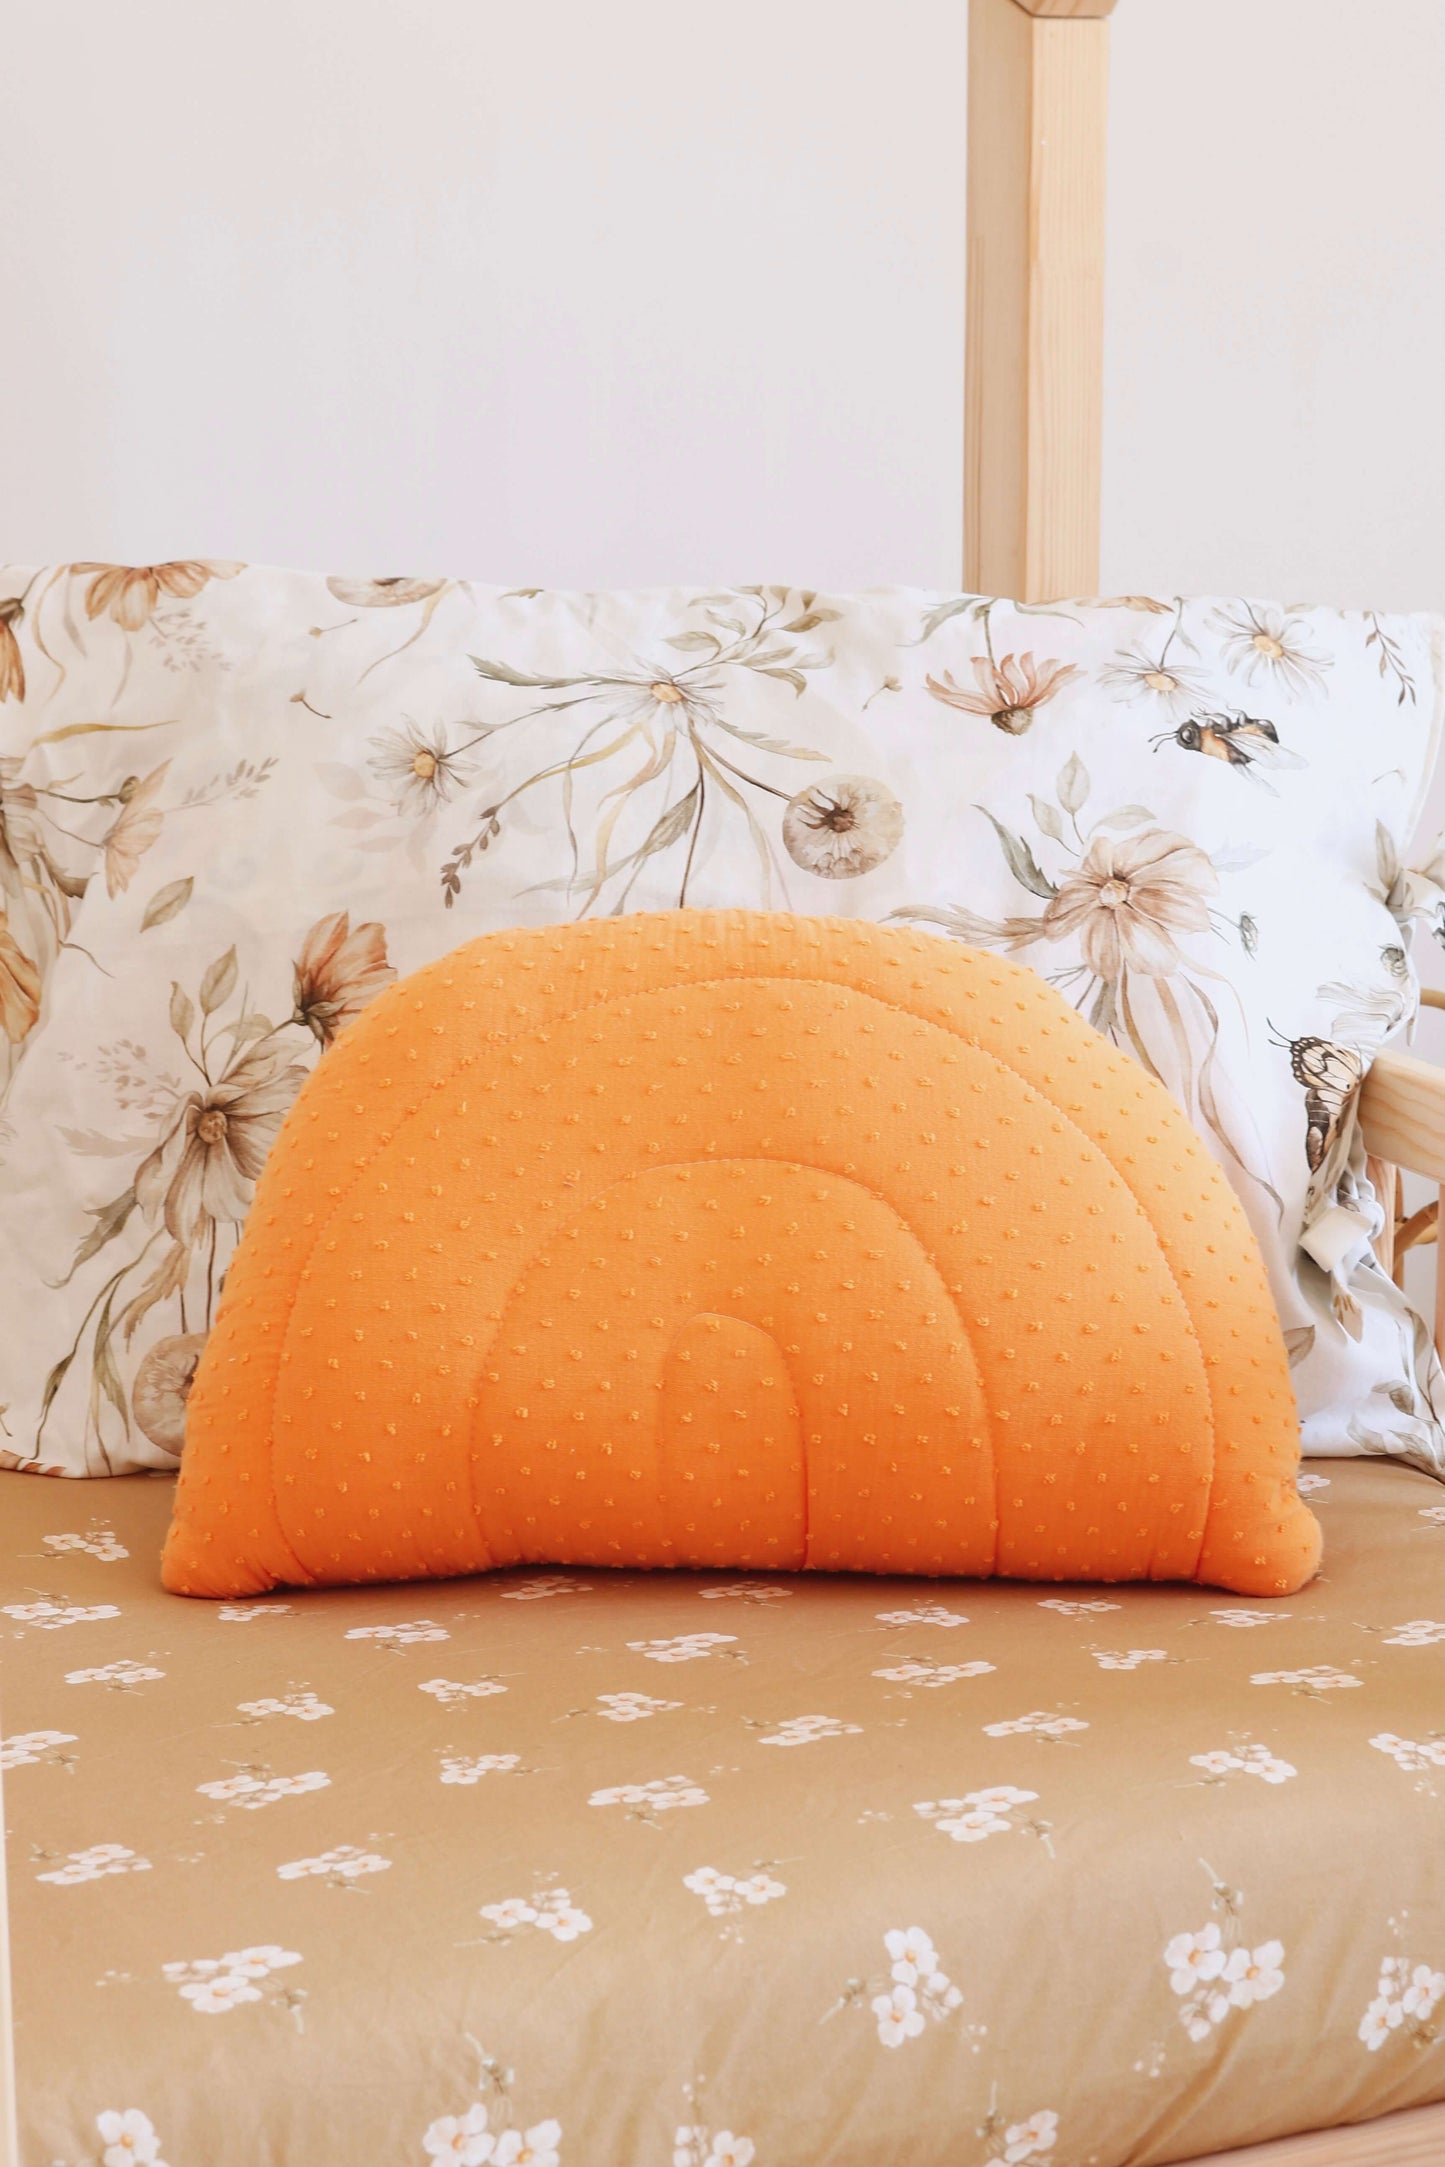 Matuu - Papaya pillow - orange rainbow muslin pillow